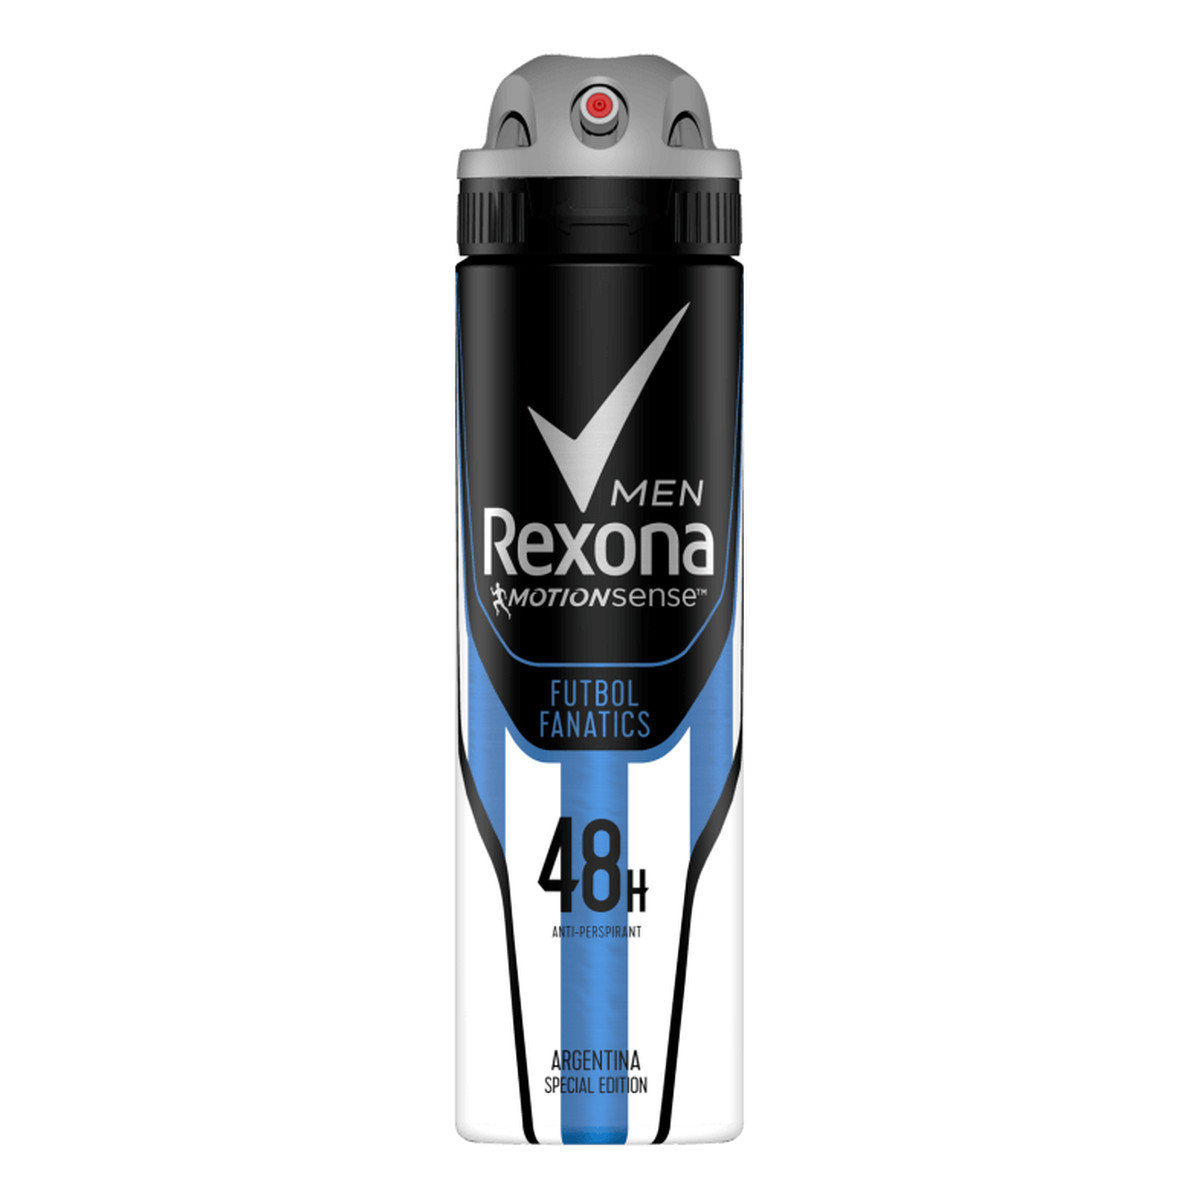 Rexona Motion Sense FIFA dezodorant spray Argentina 150ml